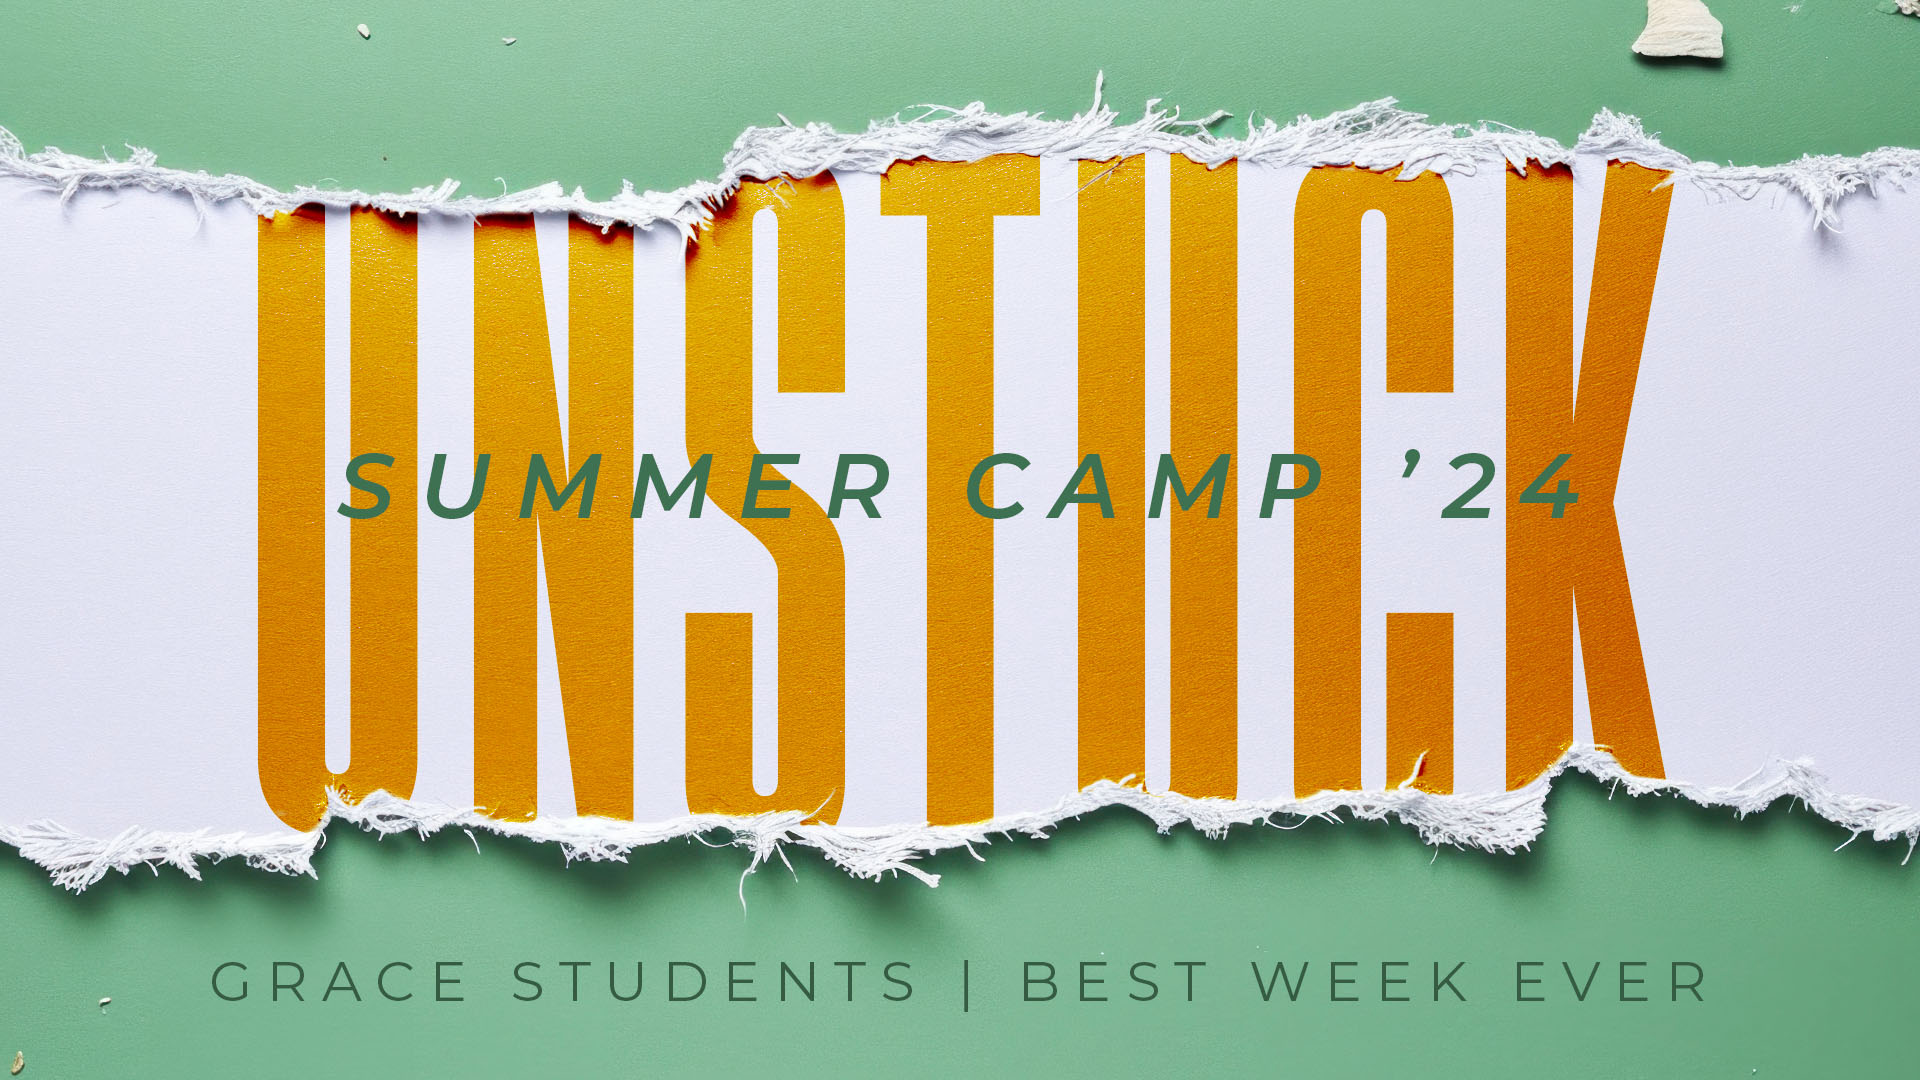 Summer Camp | Best Week Ever

July 15-19
At Grace Church
